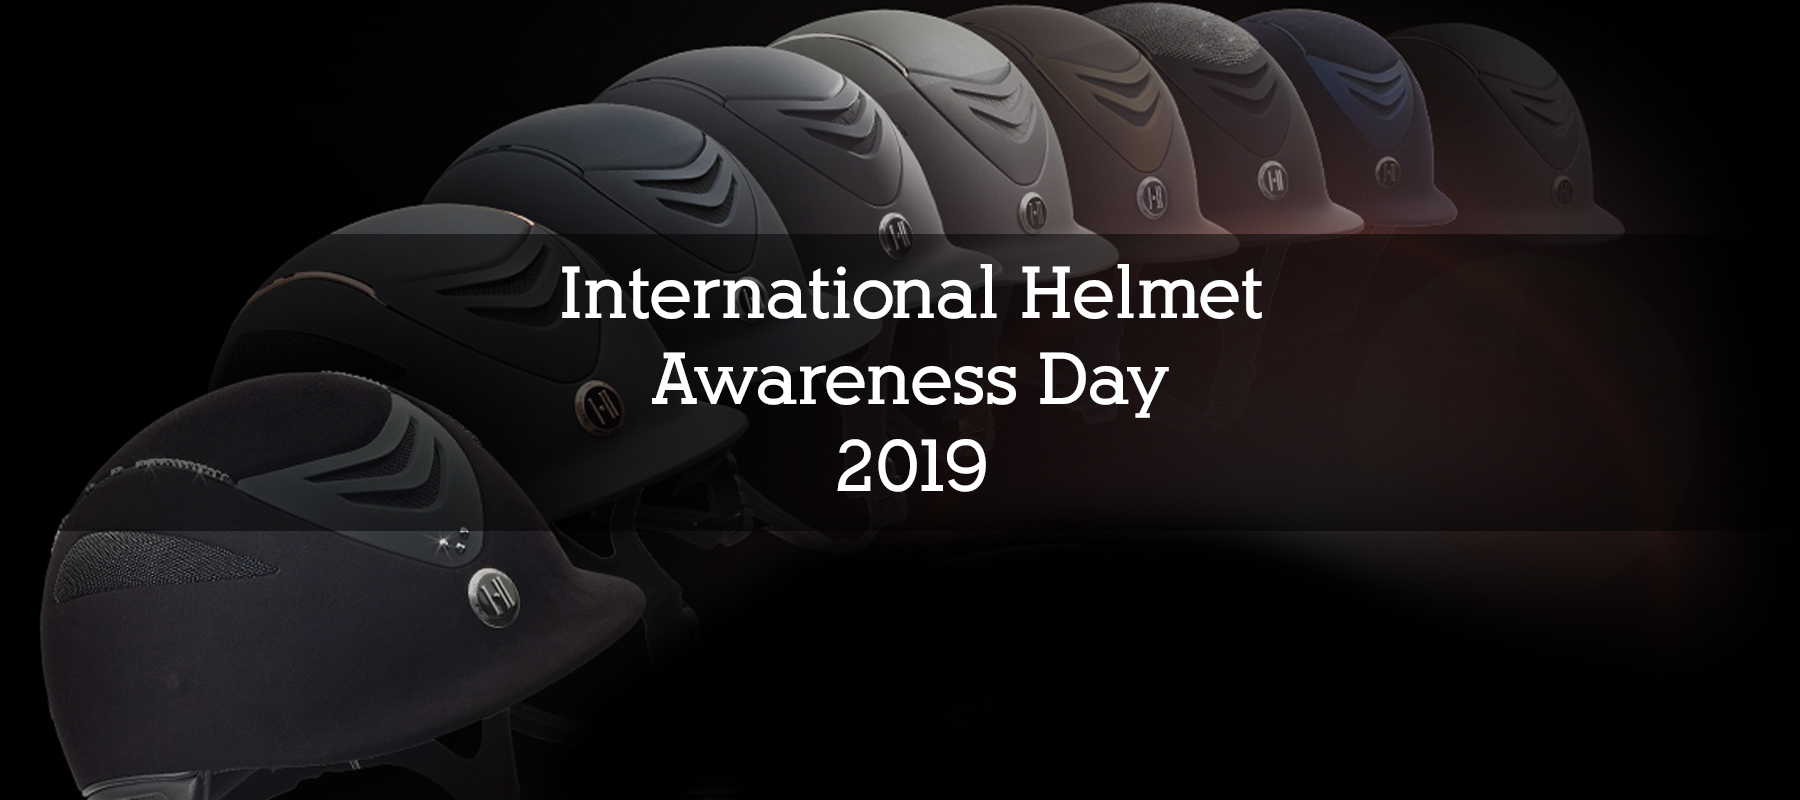 International Helmet Awareness Day 2019